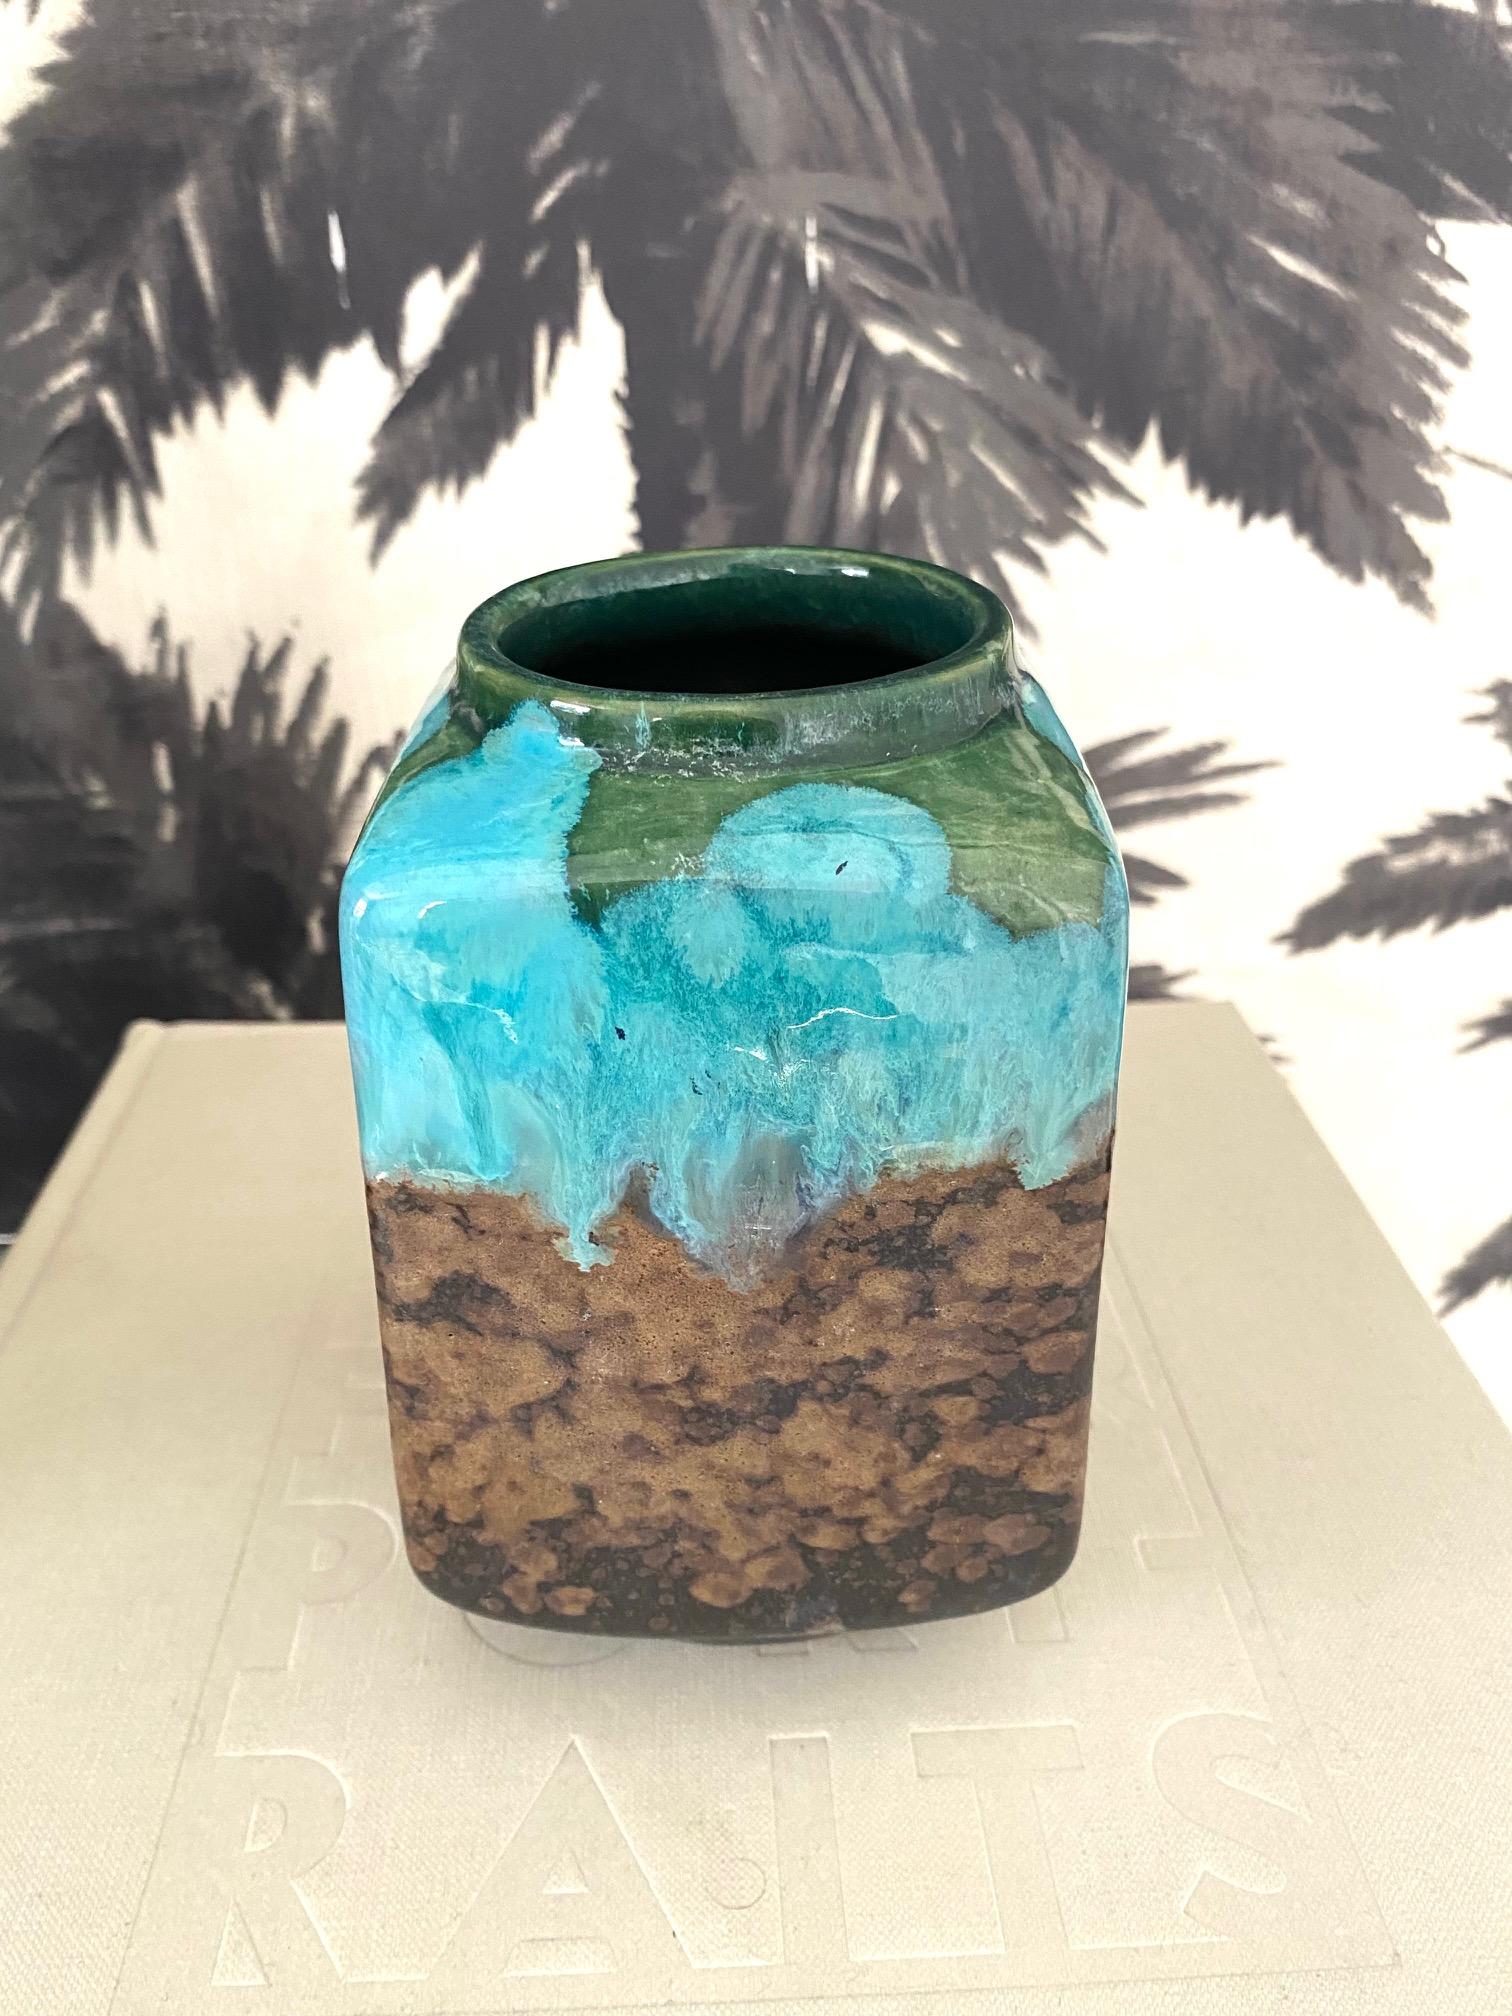 Hand-Crafted Mid-Century Modern Raku Pottery Vase with Turquoise Drip Glaze, c. 1960's